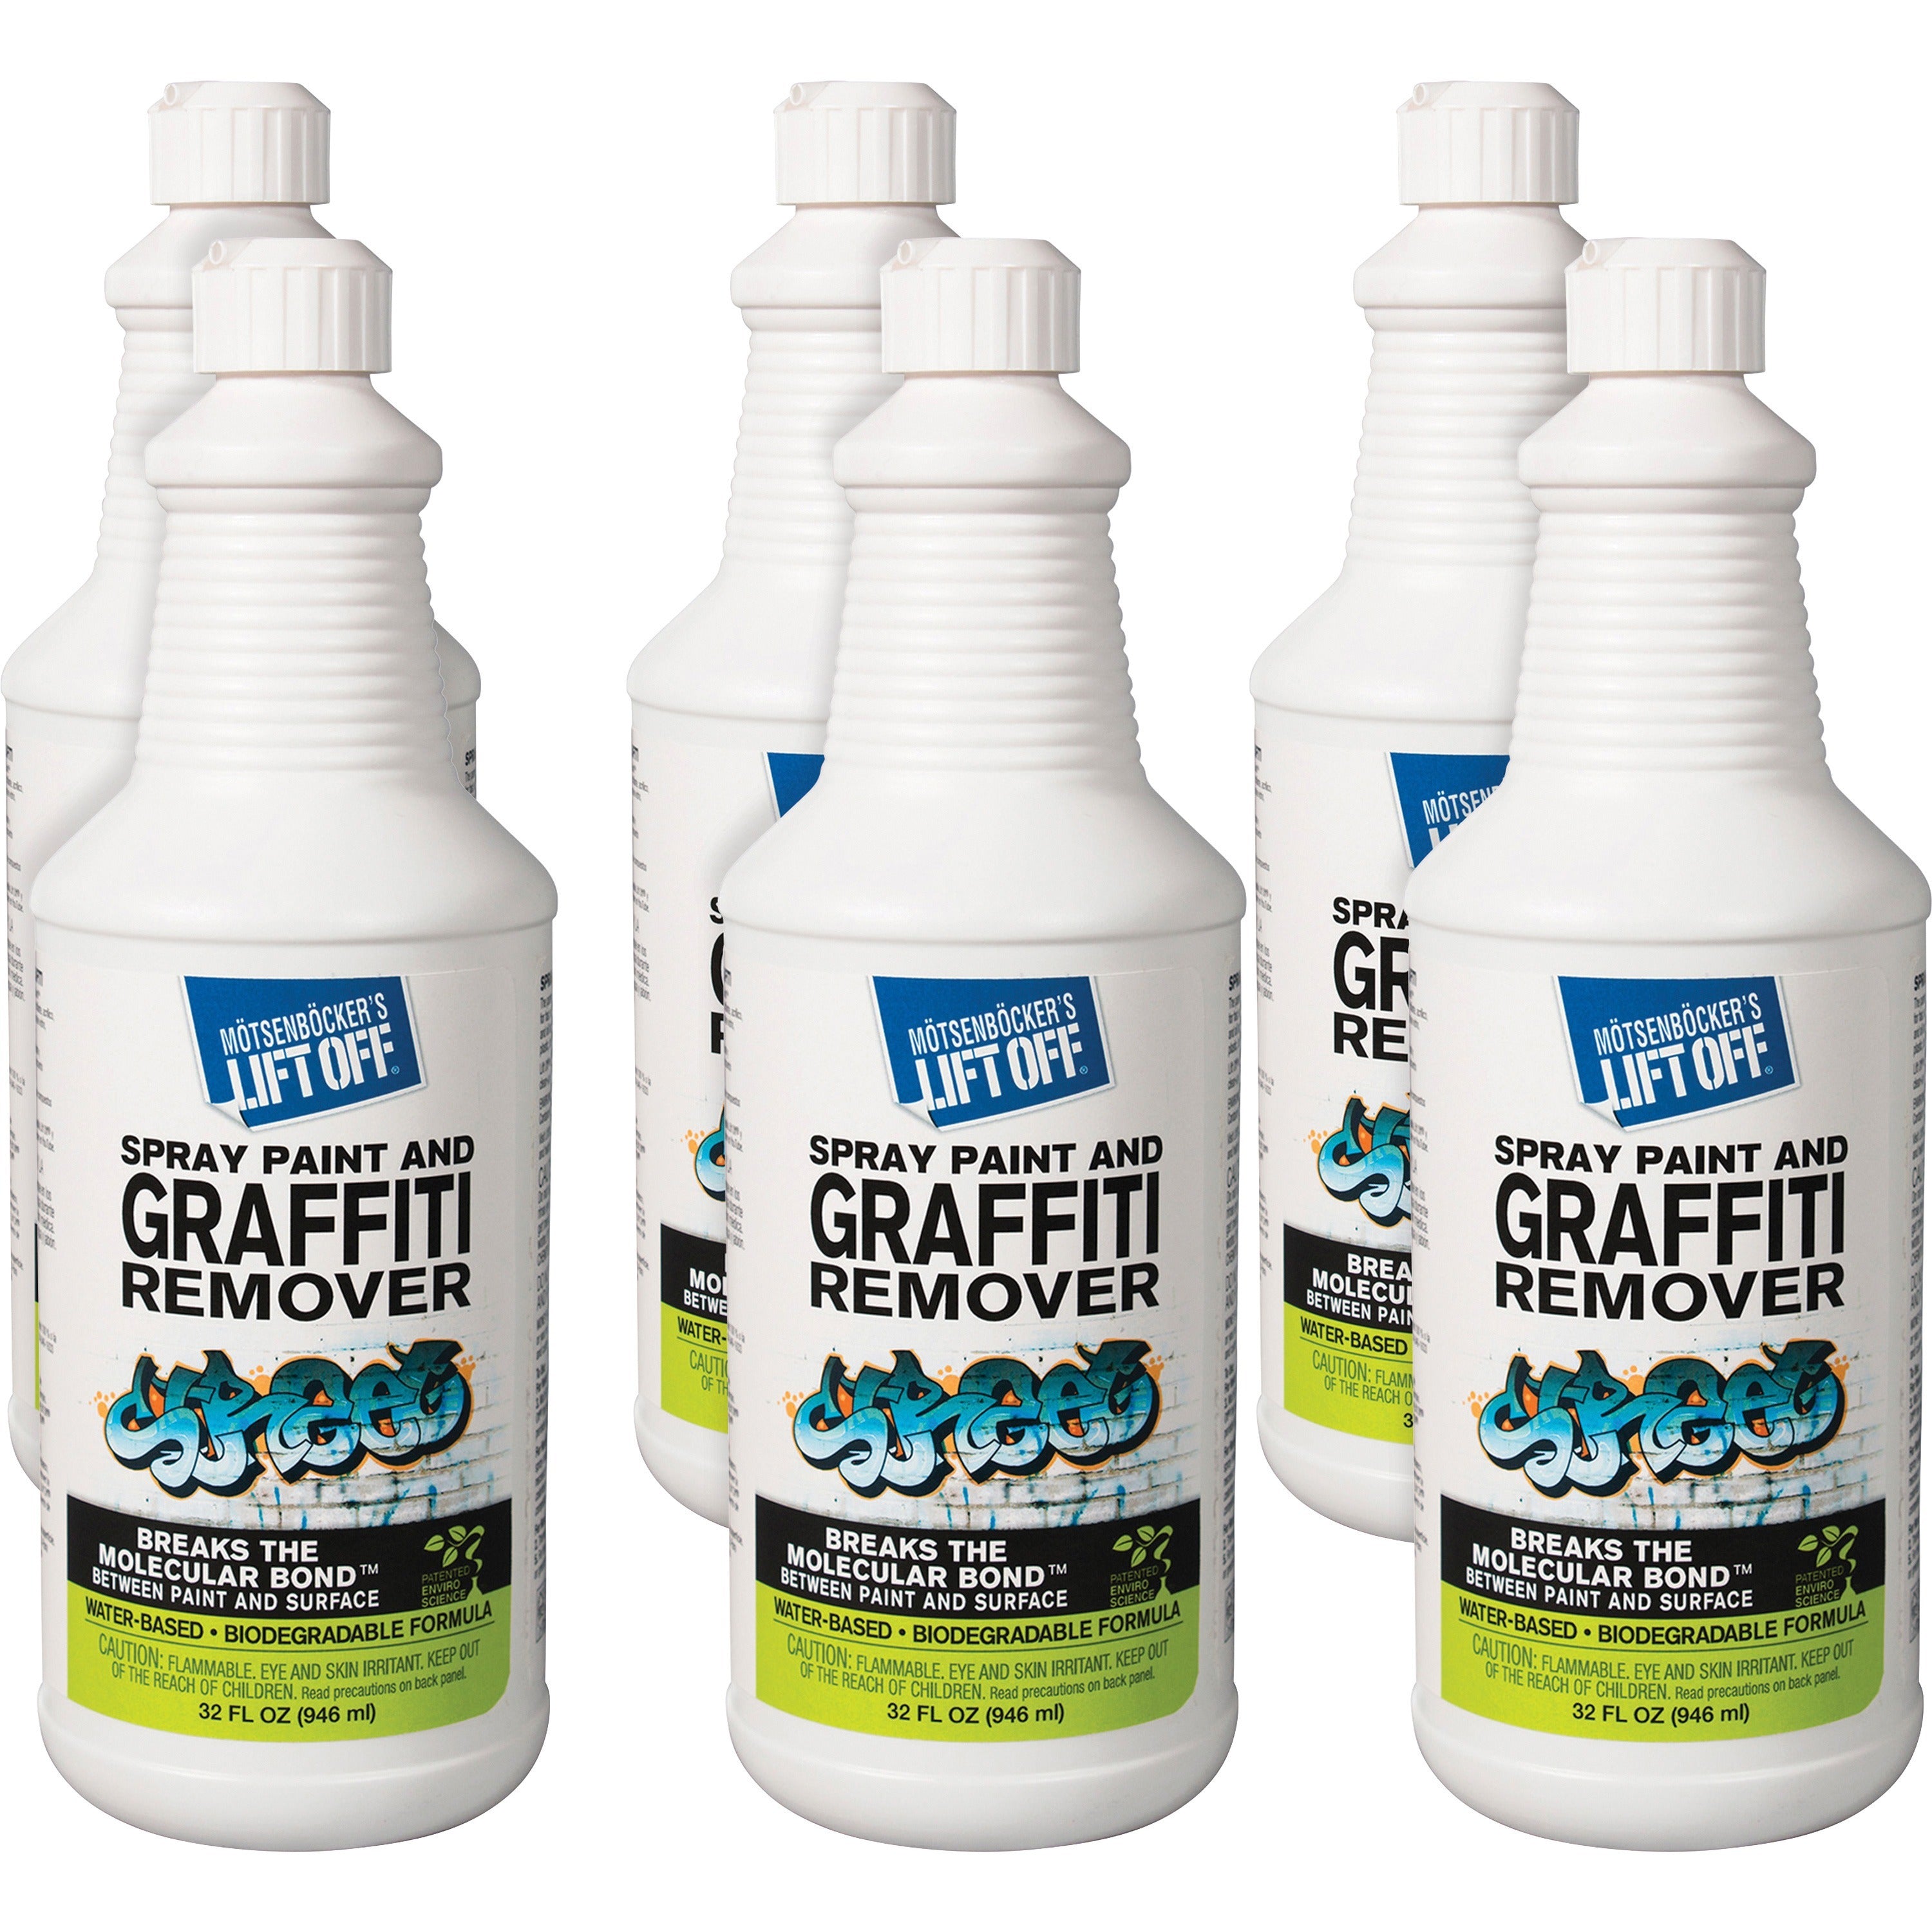 mtsenbckers-lift-off-spray-paint-graffiti-remover-32-fl-oz-1-quart-6-carton-environmentally-friendly-water-based-white_mot41103ct - 1